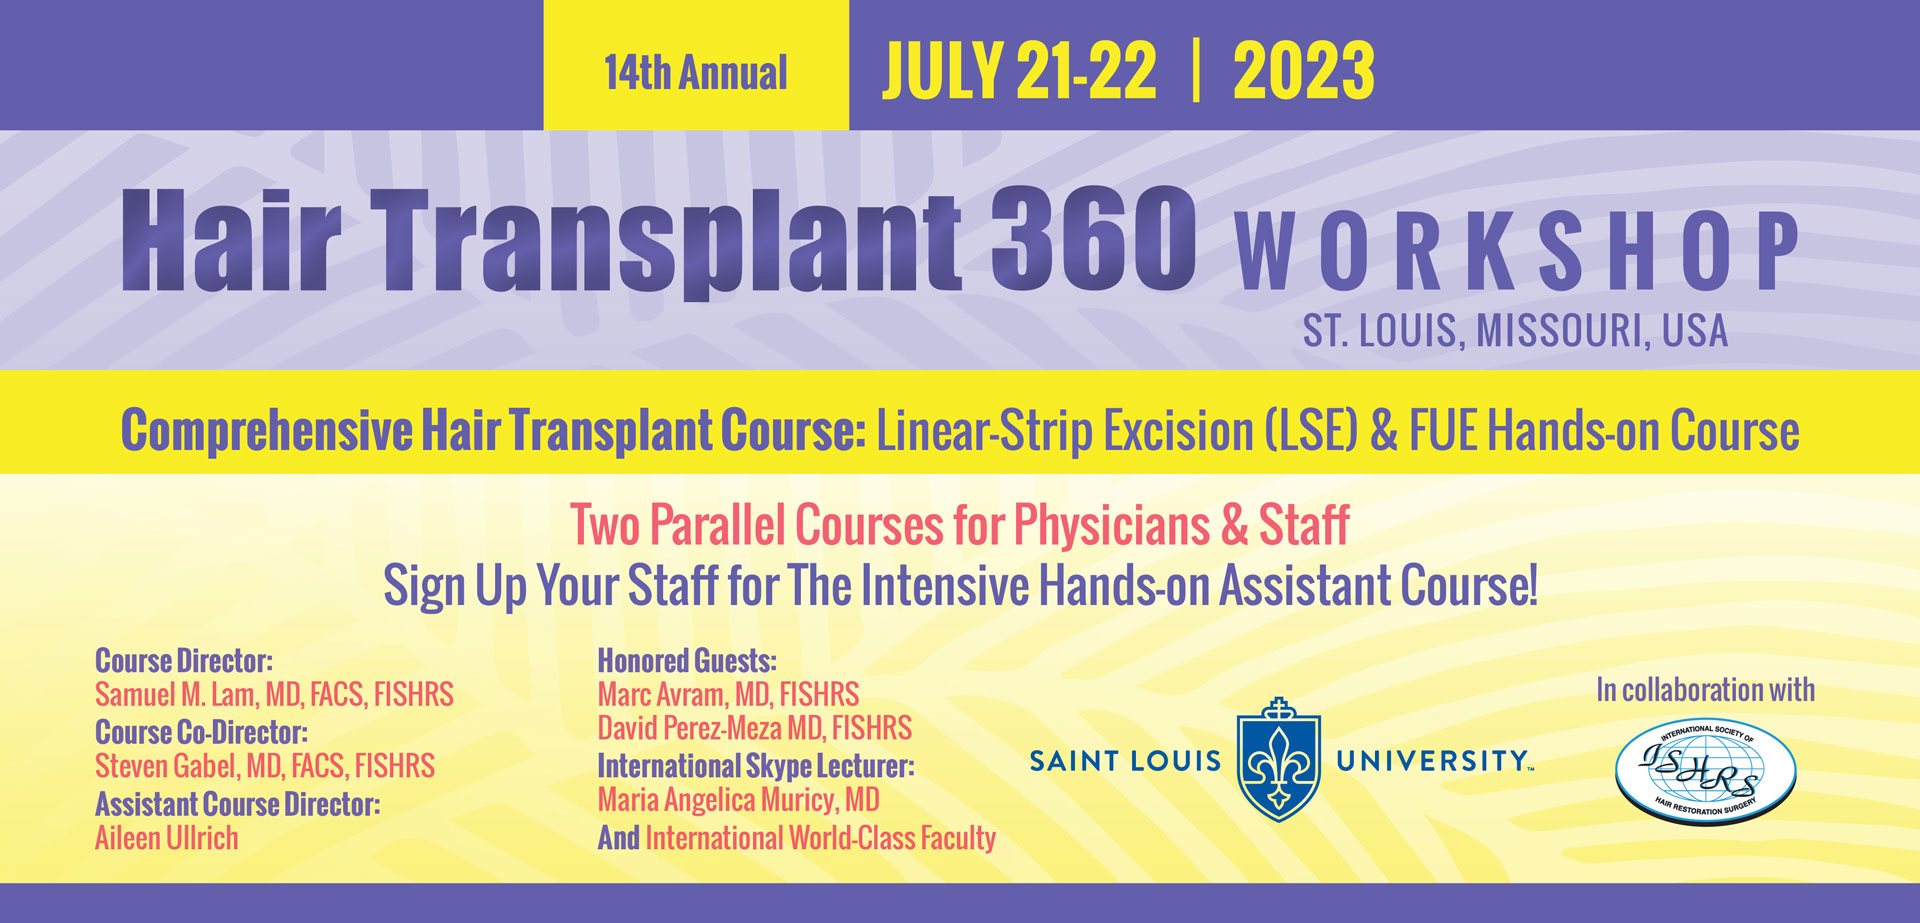 14th Annual Hair Transplant 360 Workshop